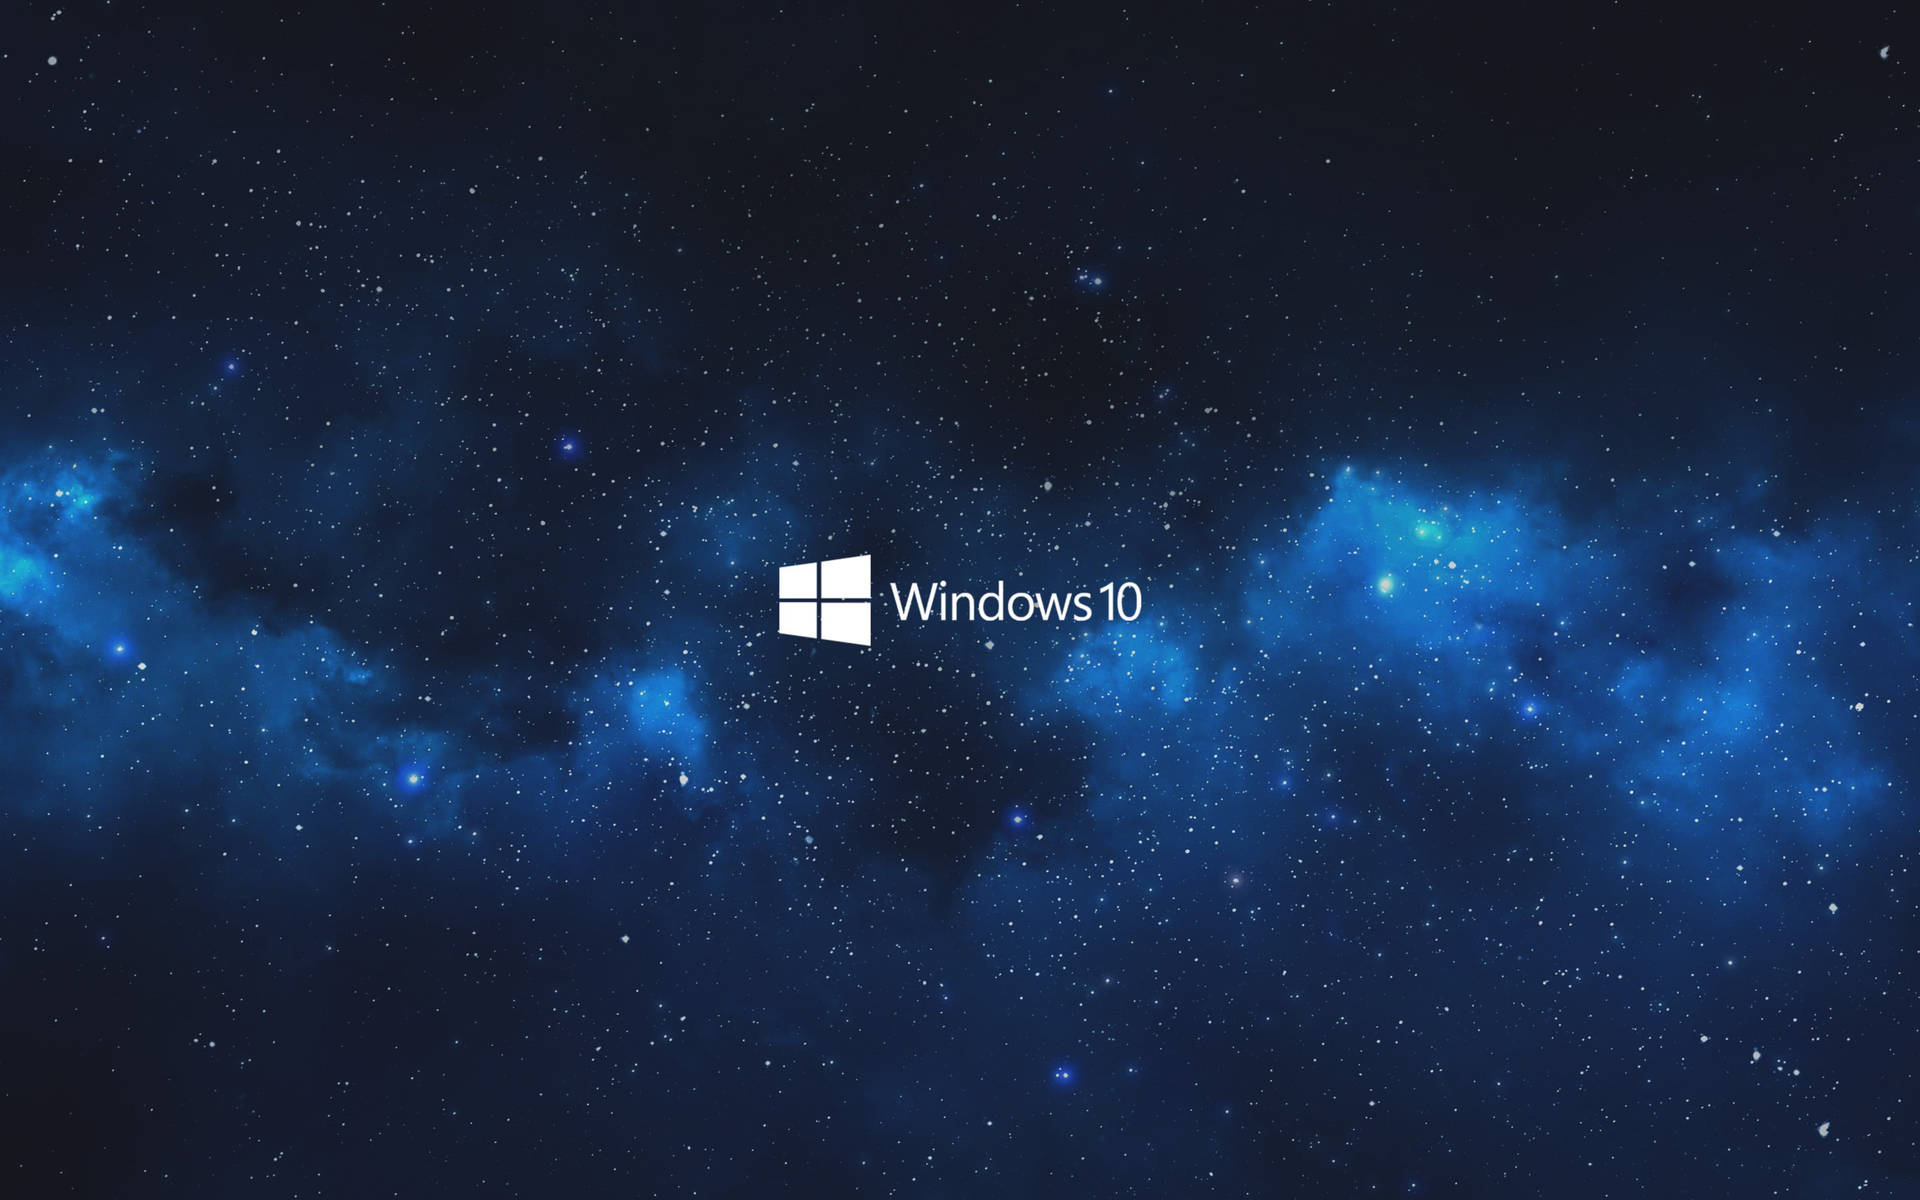 Windows 10 Blue Galaxy Background